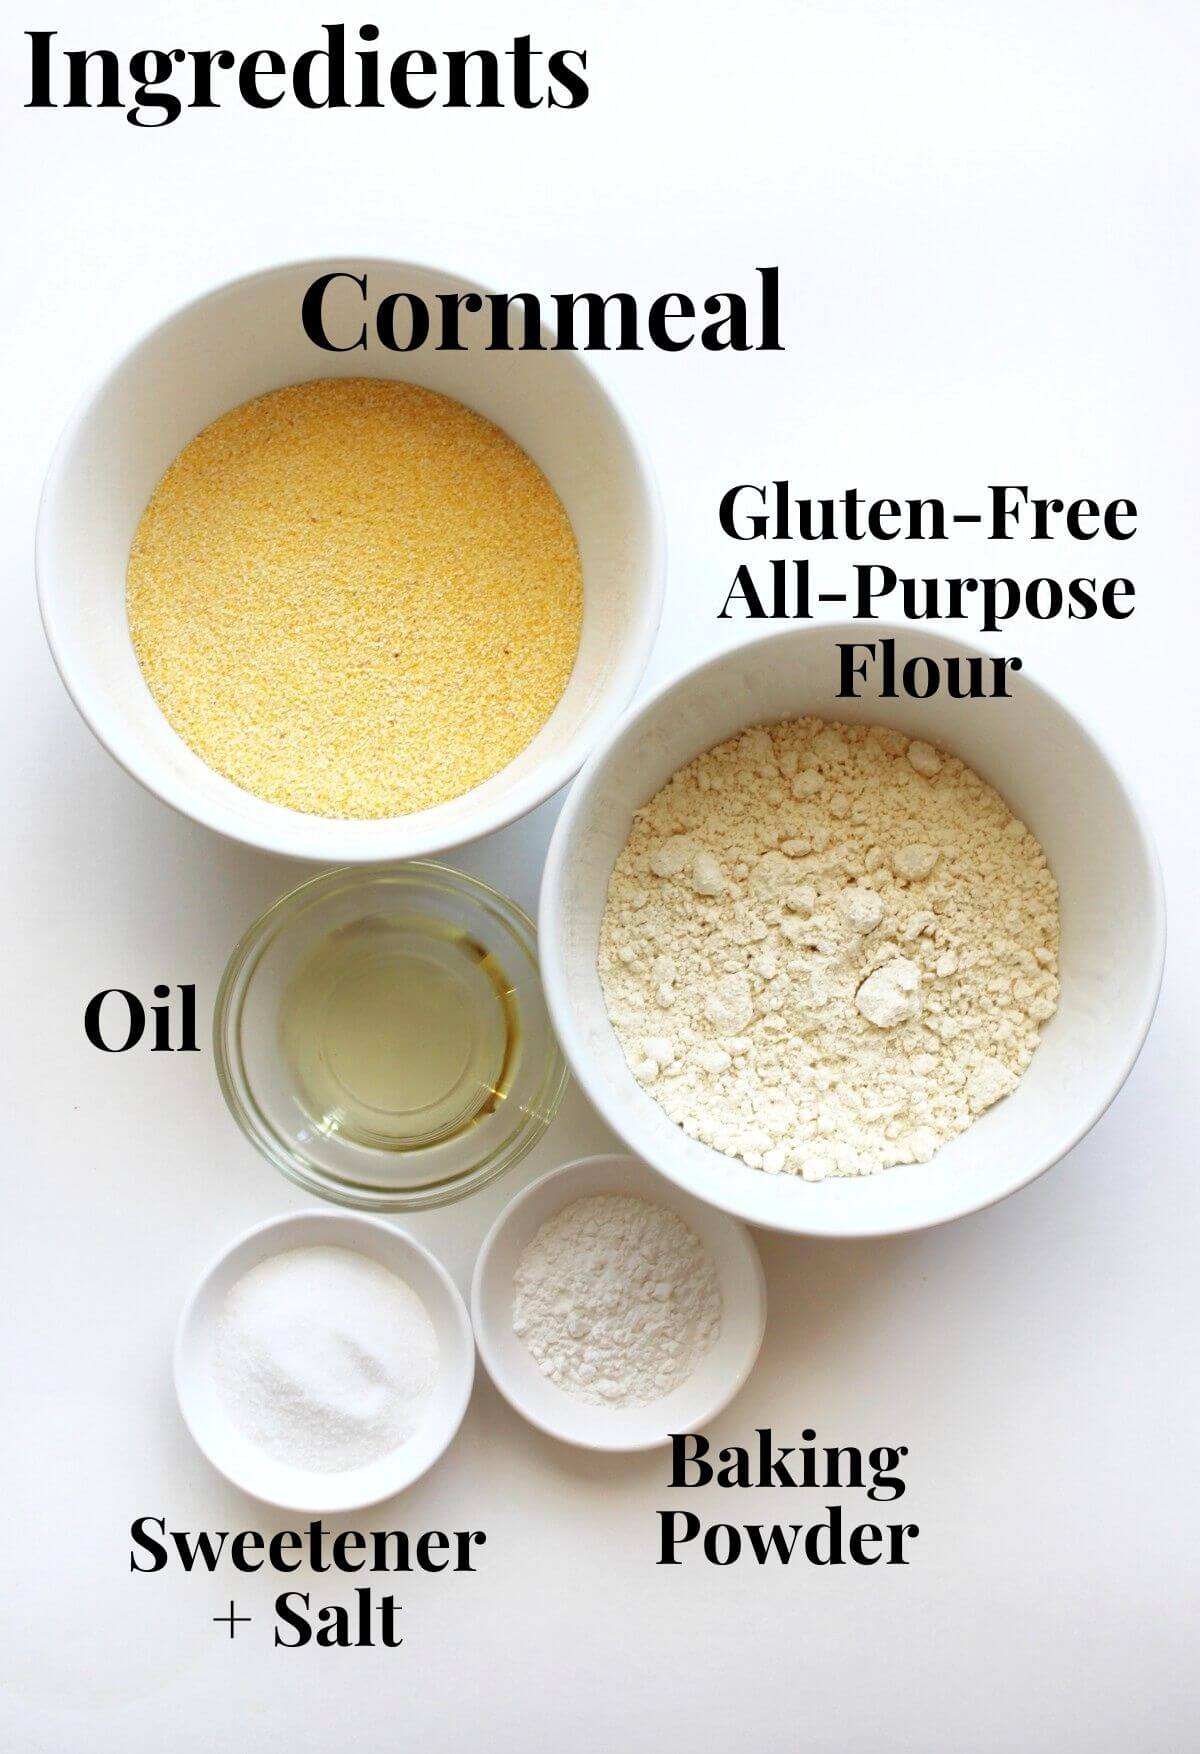 ingredients for gluten-free jiffy corn muffin mix copycat